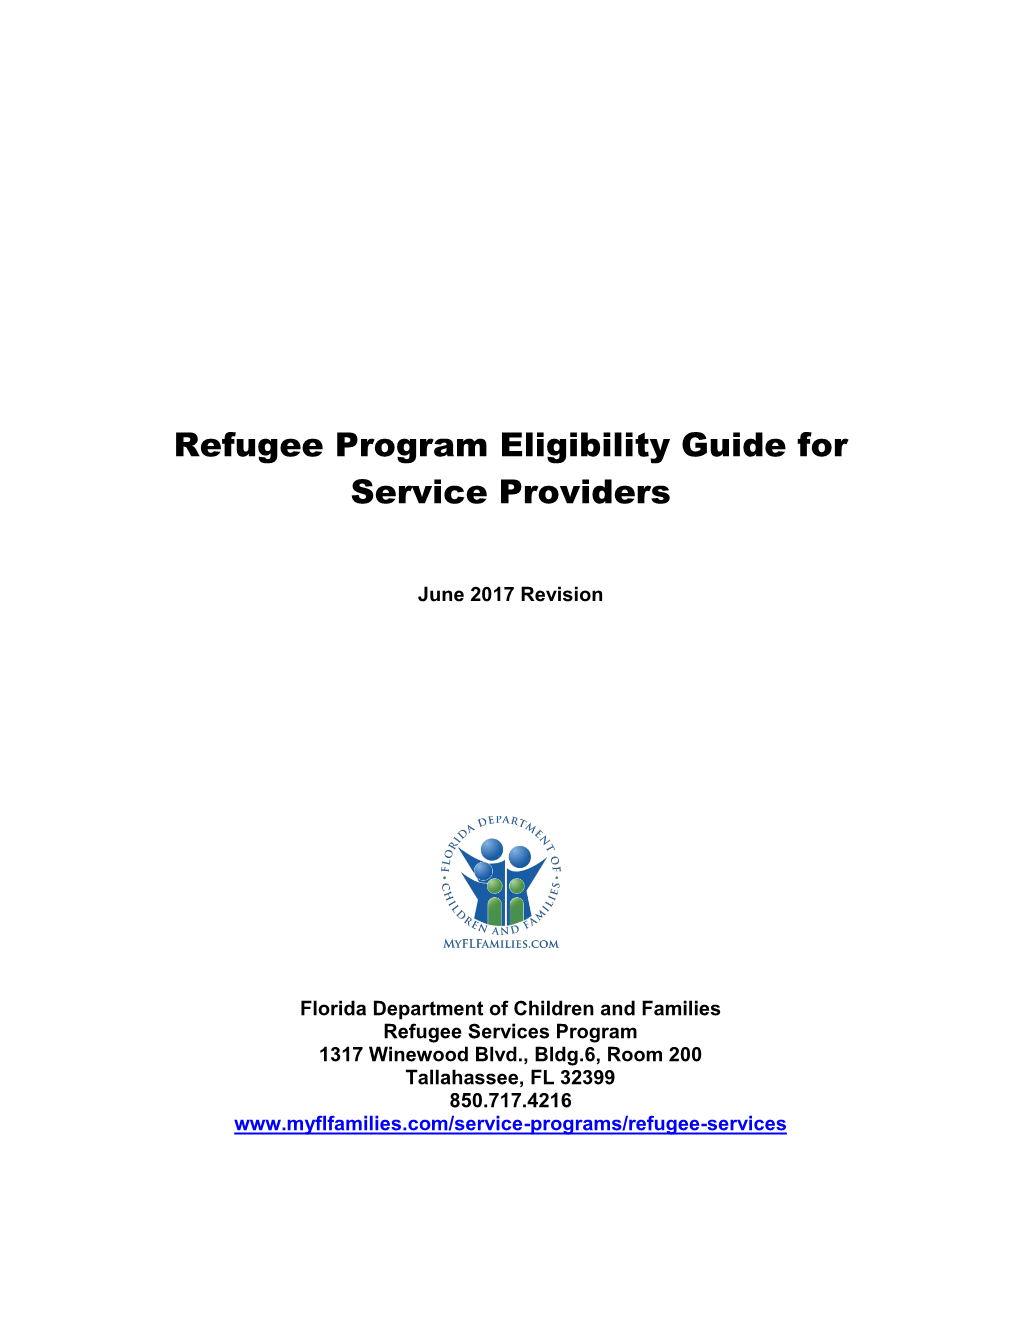 Refugee Program Eligibility Guide for Service Providers